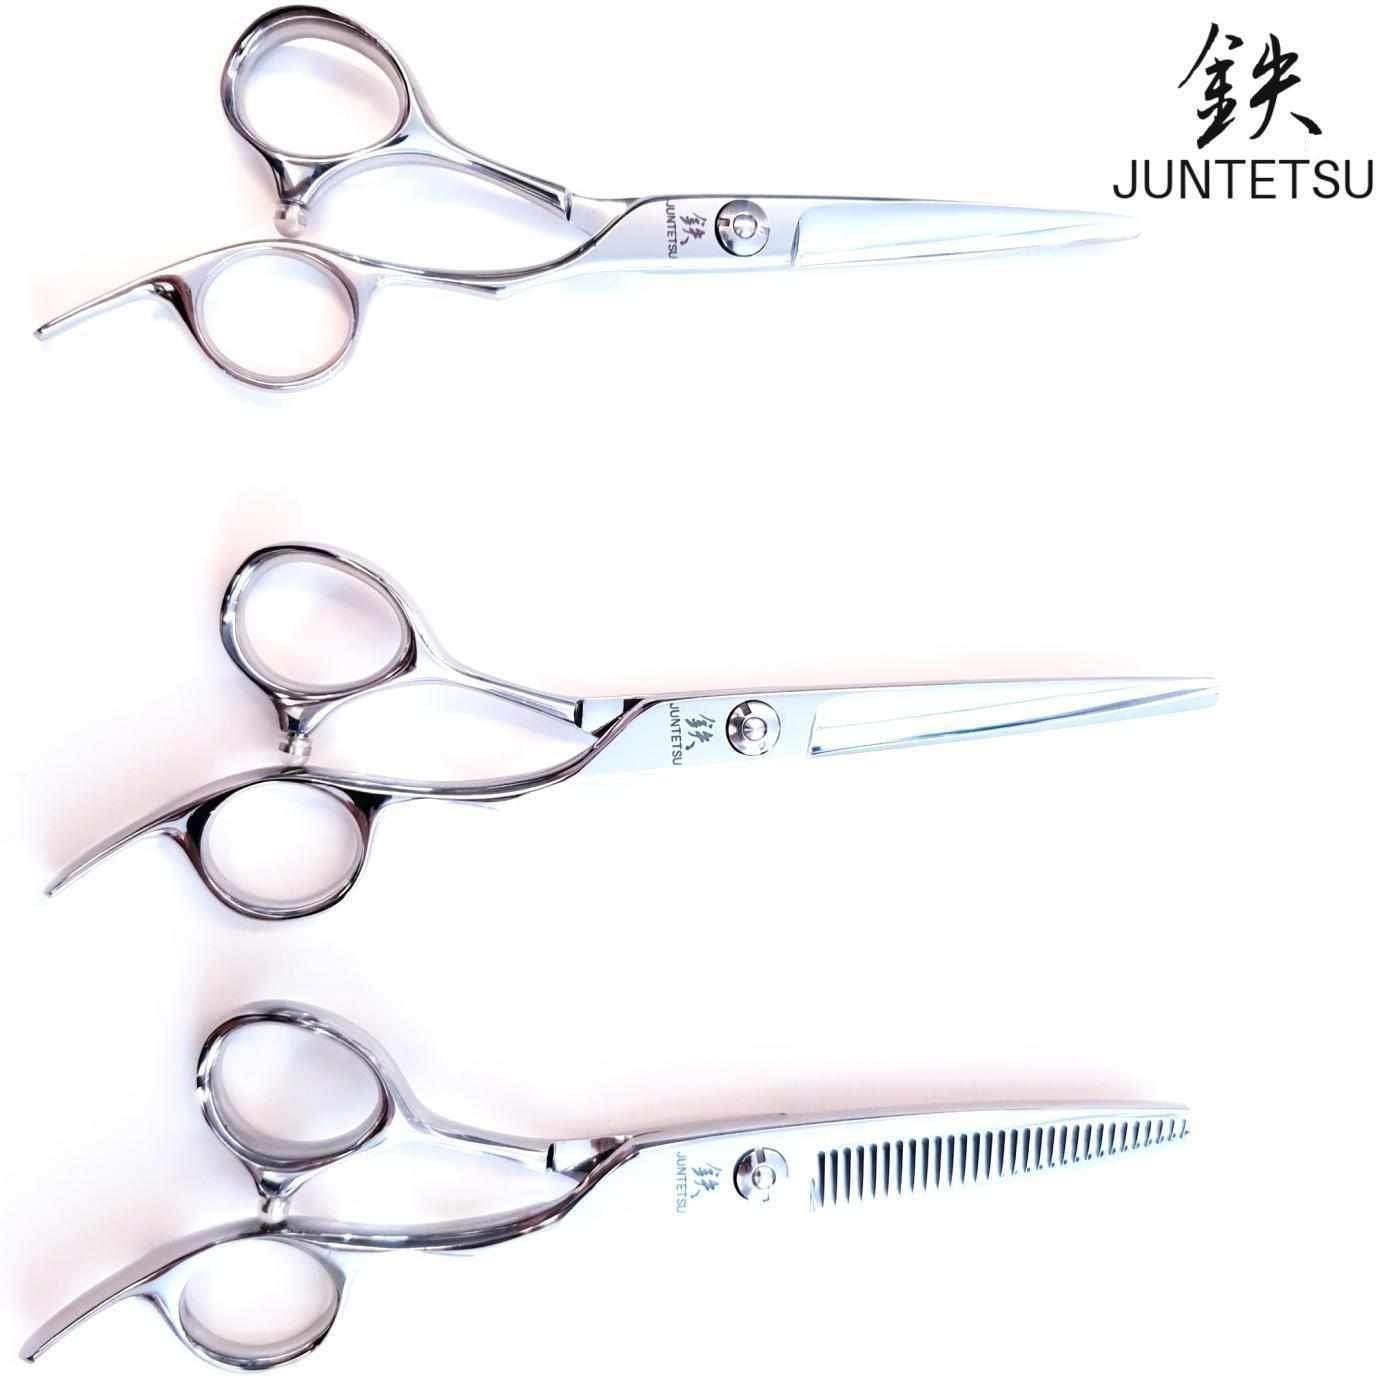 Juntetsu Offset Cutting & Thinning Master Scissor Set - Japan Scissors USA